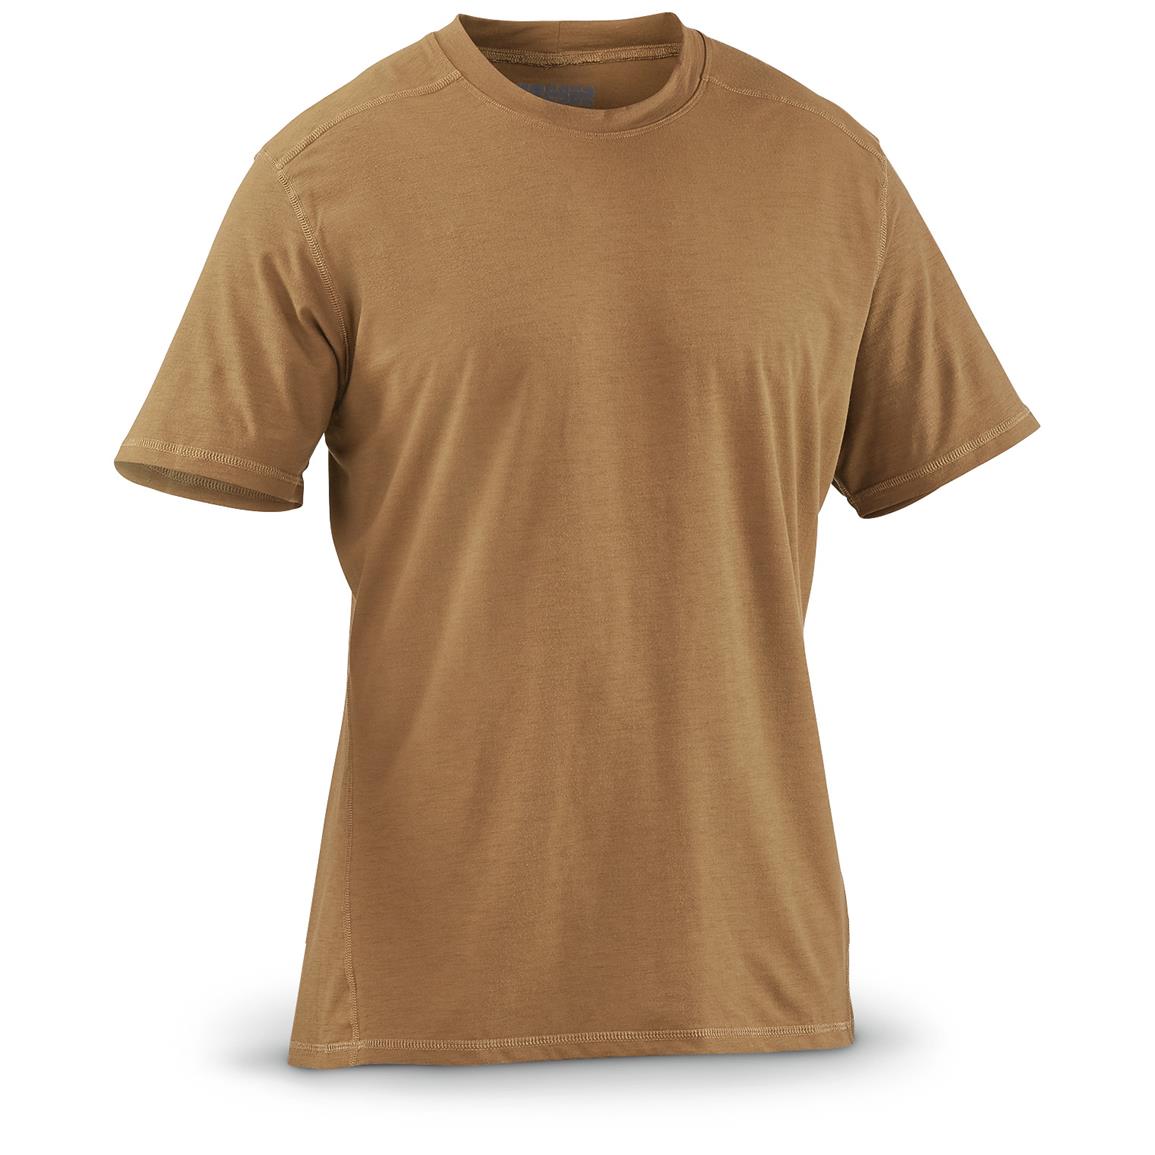 U.S. Military Surplus Aramid Flame-Resistant Short-Sleeve T-Shirt, New - 661372, Military T 